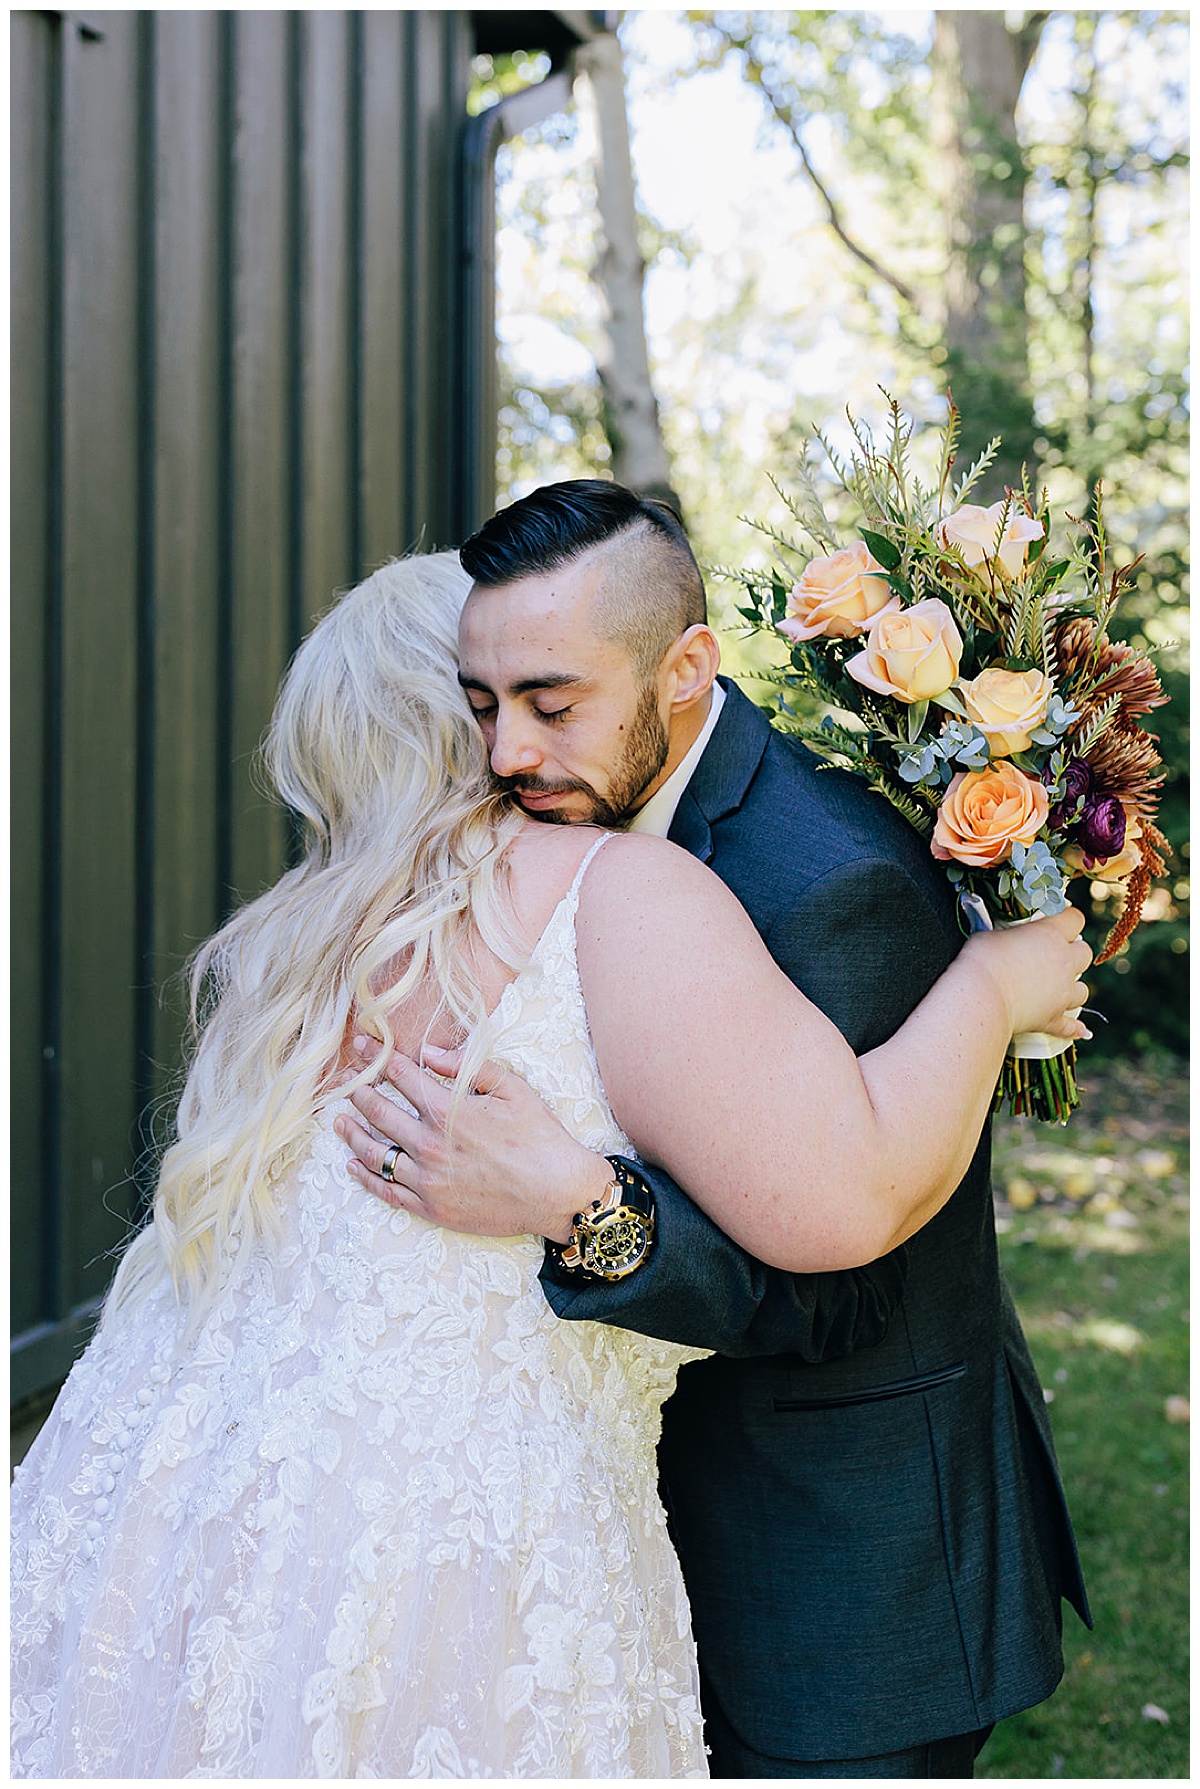 Man and woman hug each other for Kayla Bouren Photography